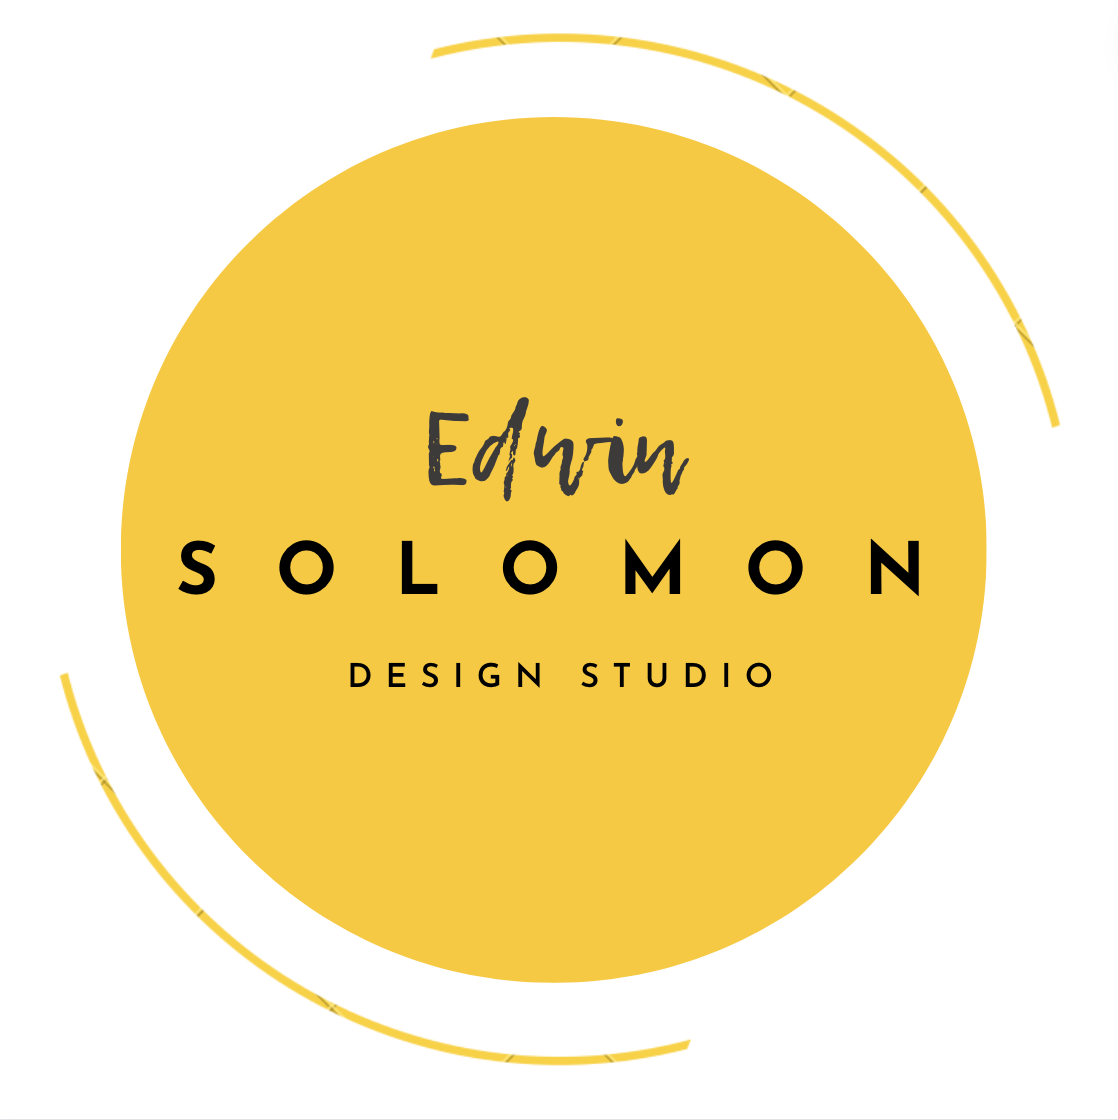 Edwin Solomon's Design Studio (PVT) Ltd